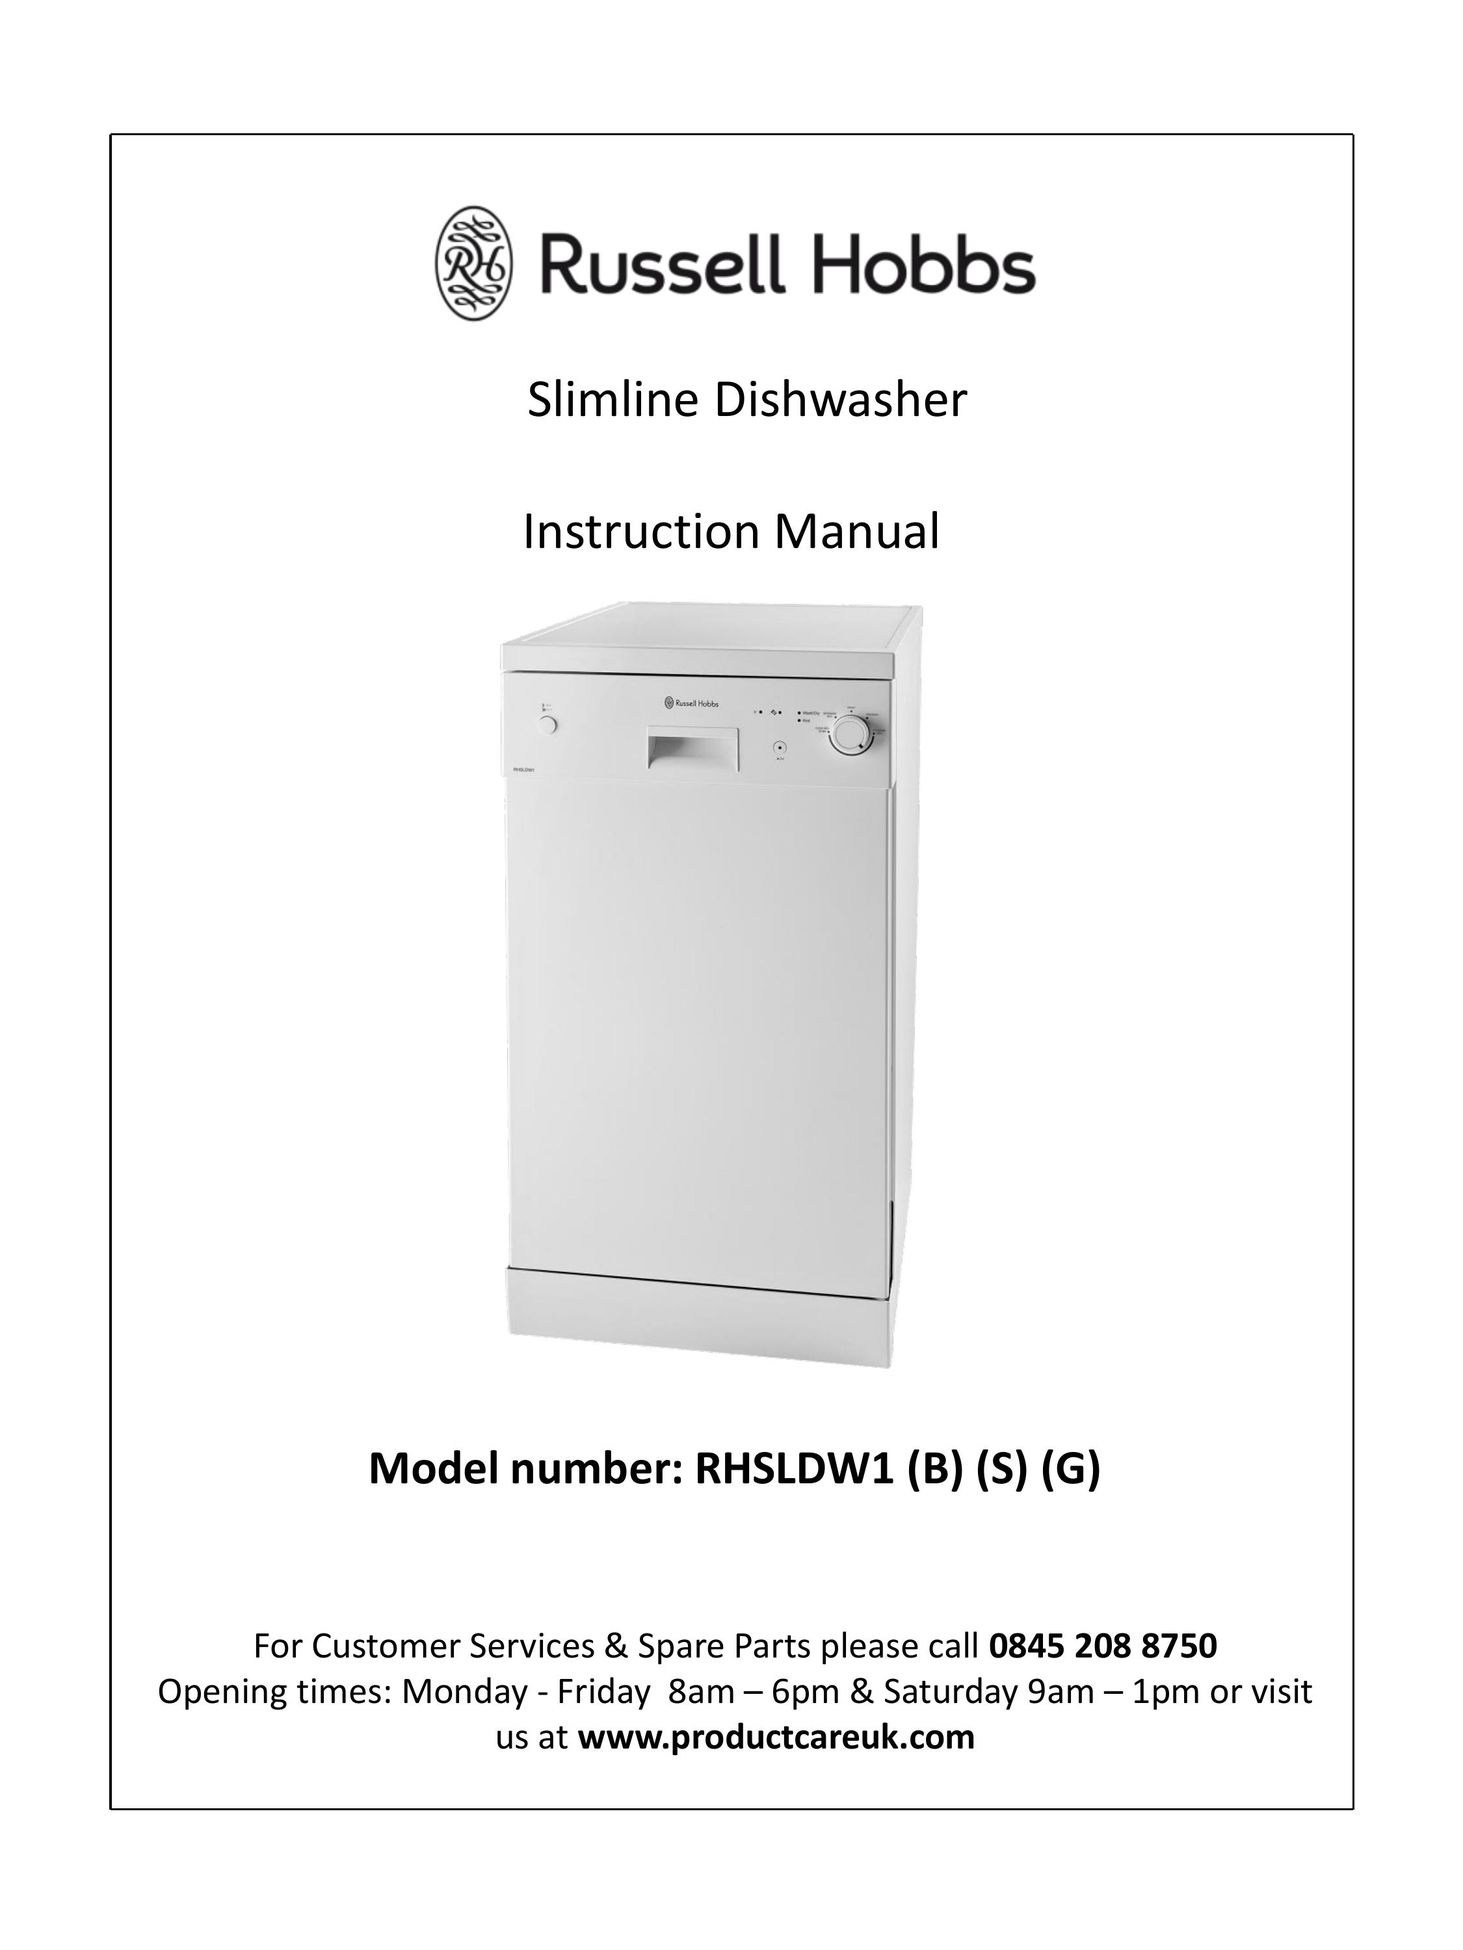 Russell Hobbs RHSLDW1S Appliance Trim Kit User Manual